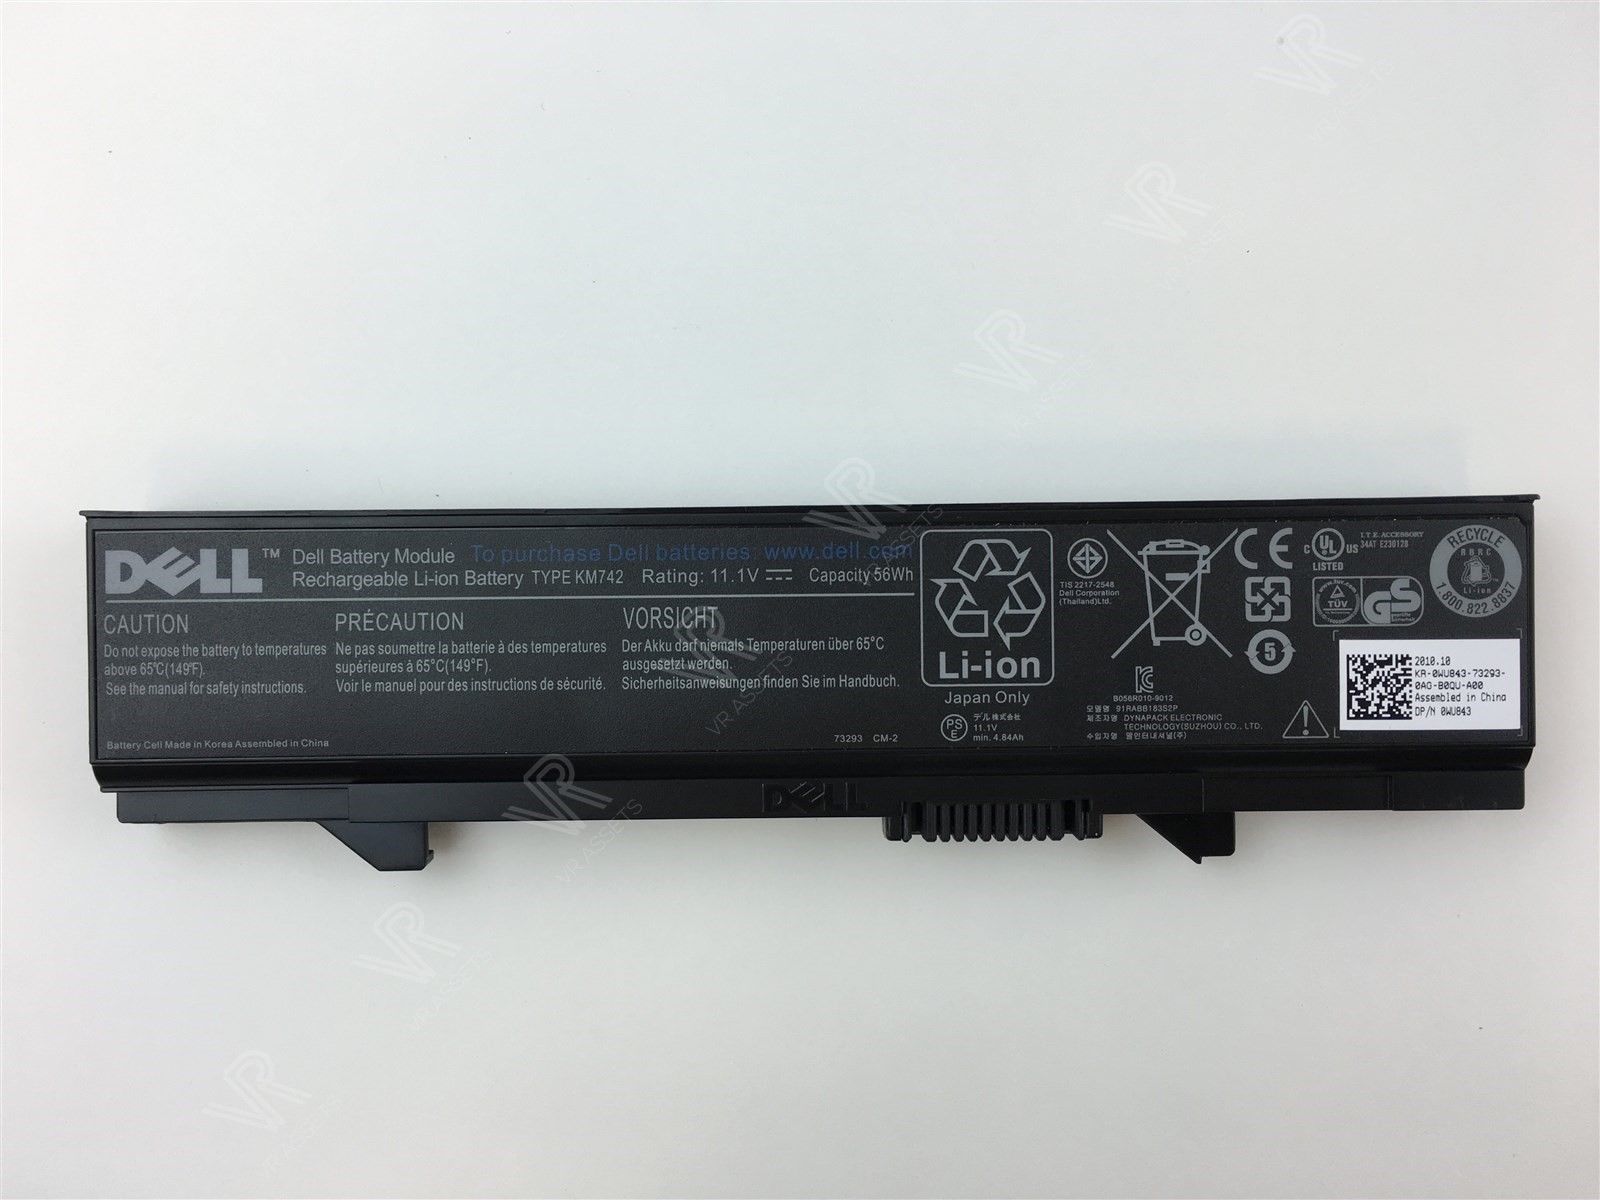 Dell Latitude E5510 E5400 E5410 E5500 56Wh Laptop Battery WU843 0WU843 KM742